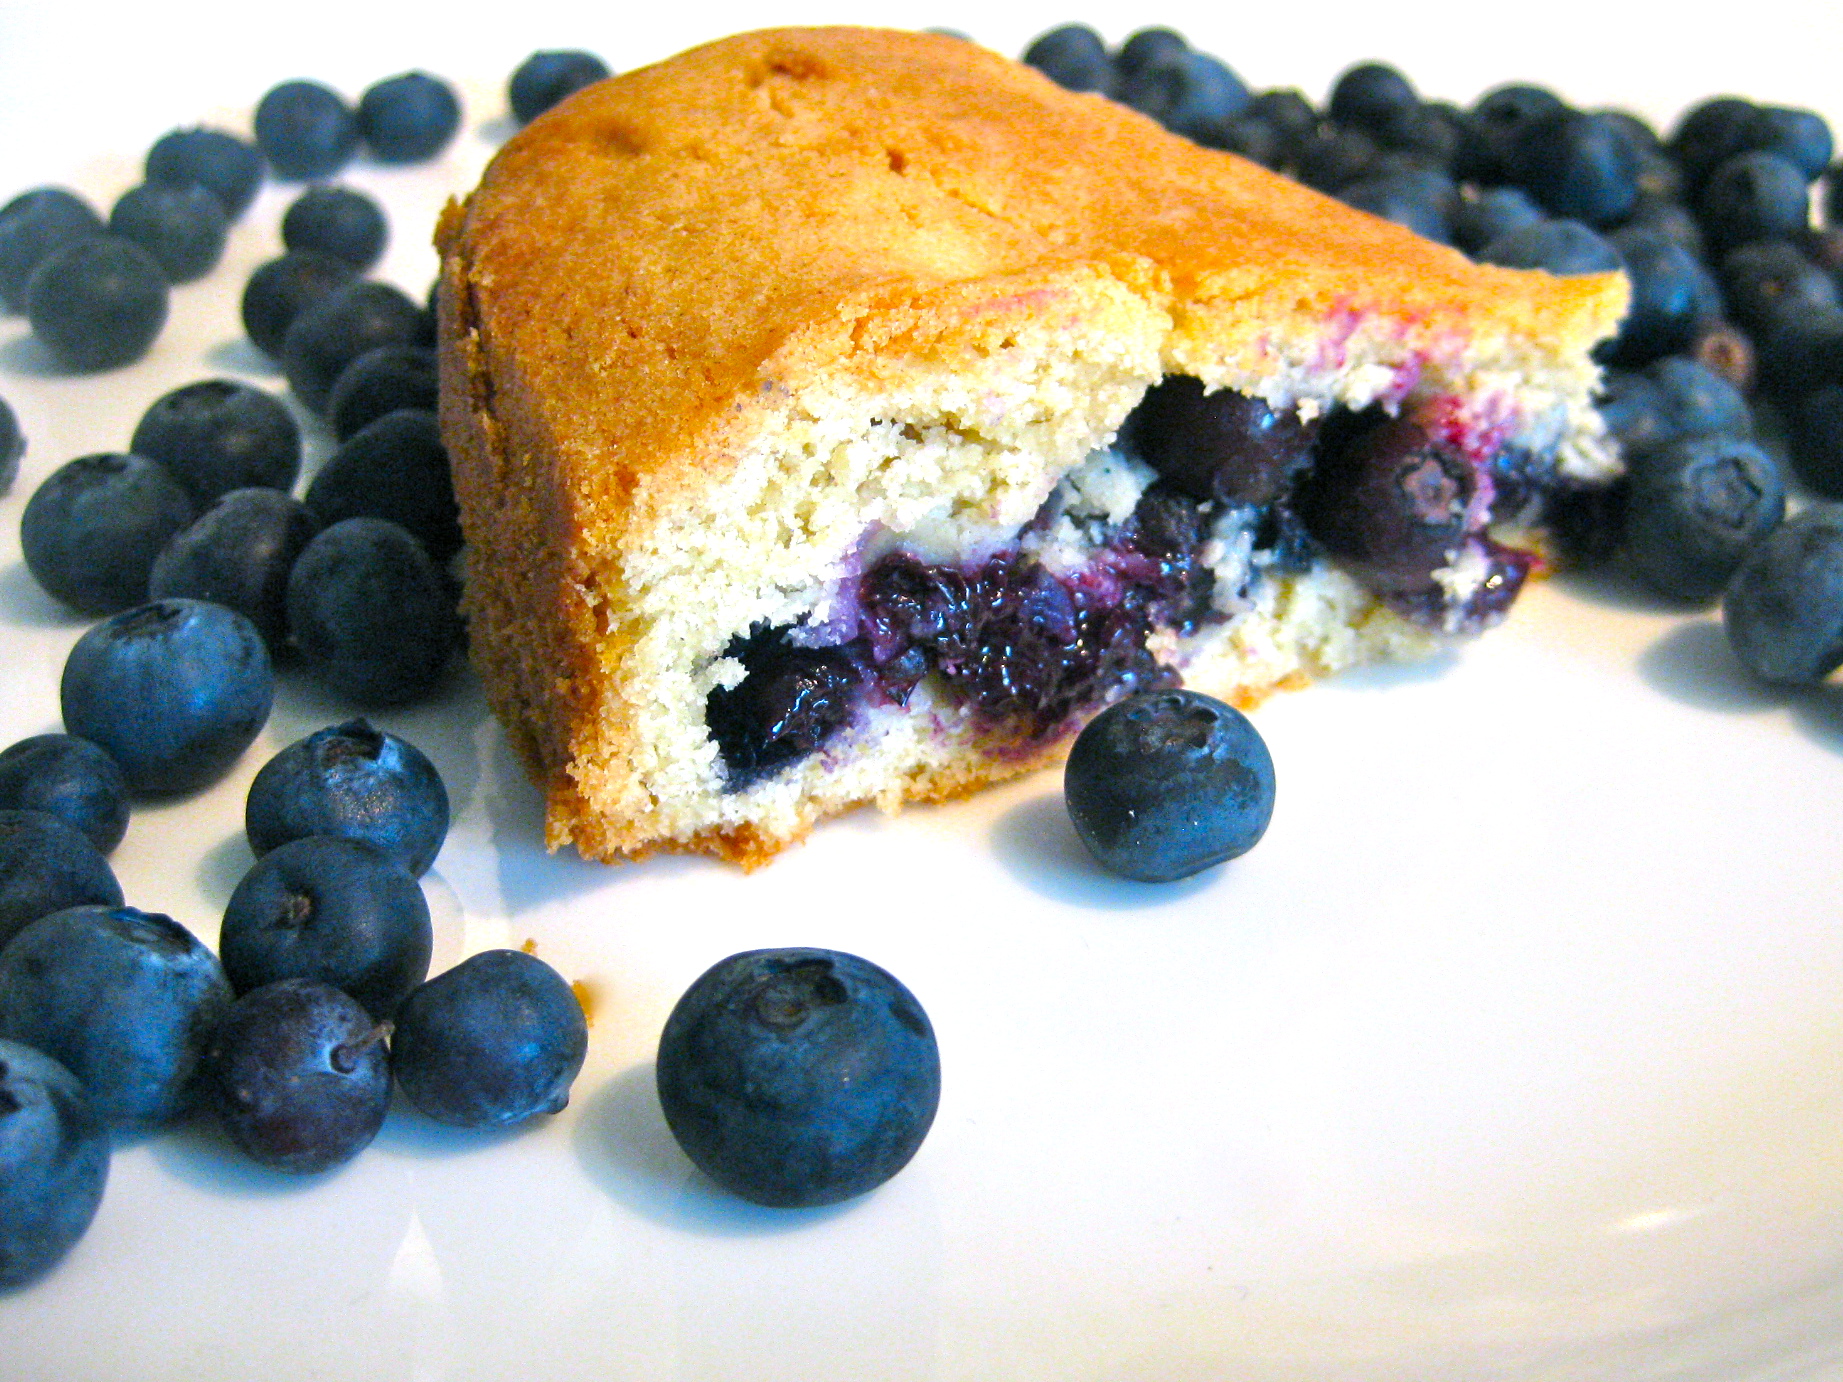 Blueberry butter cake